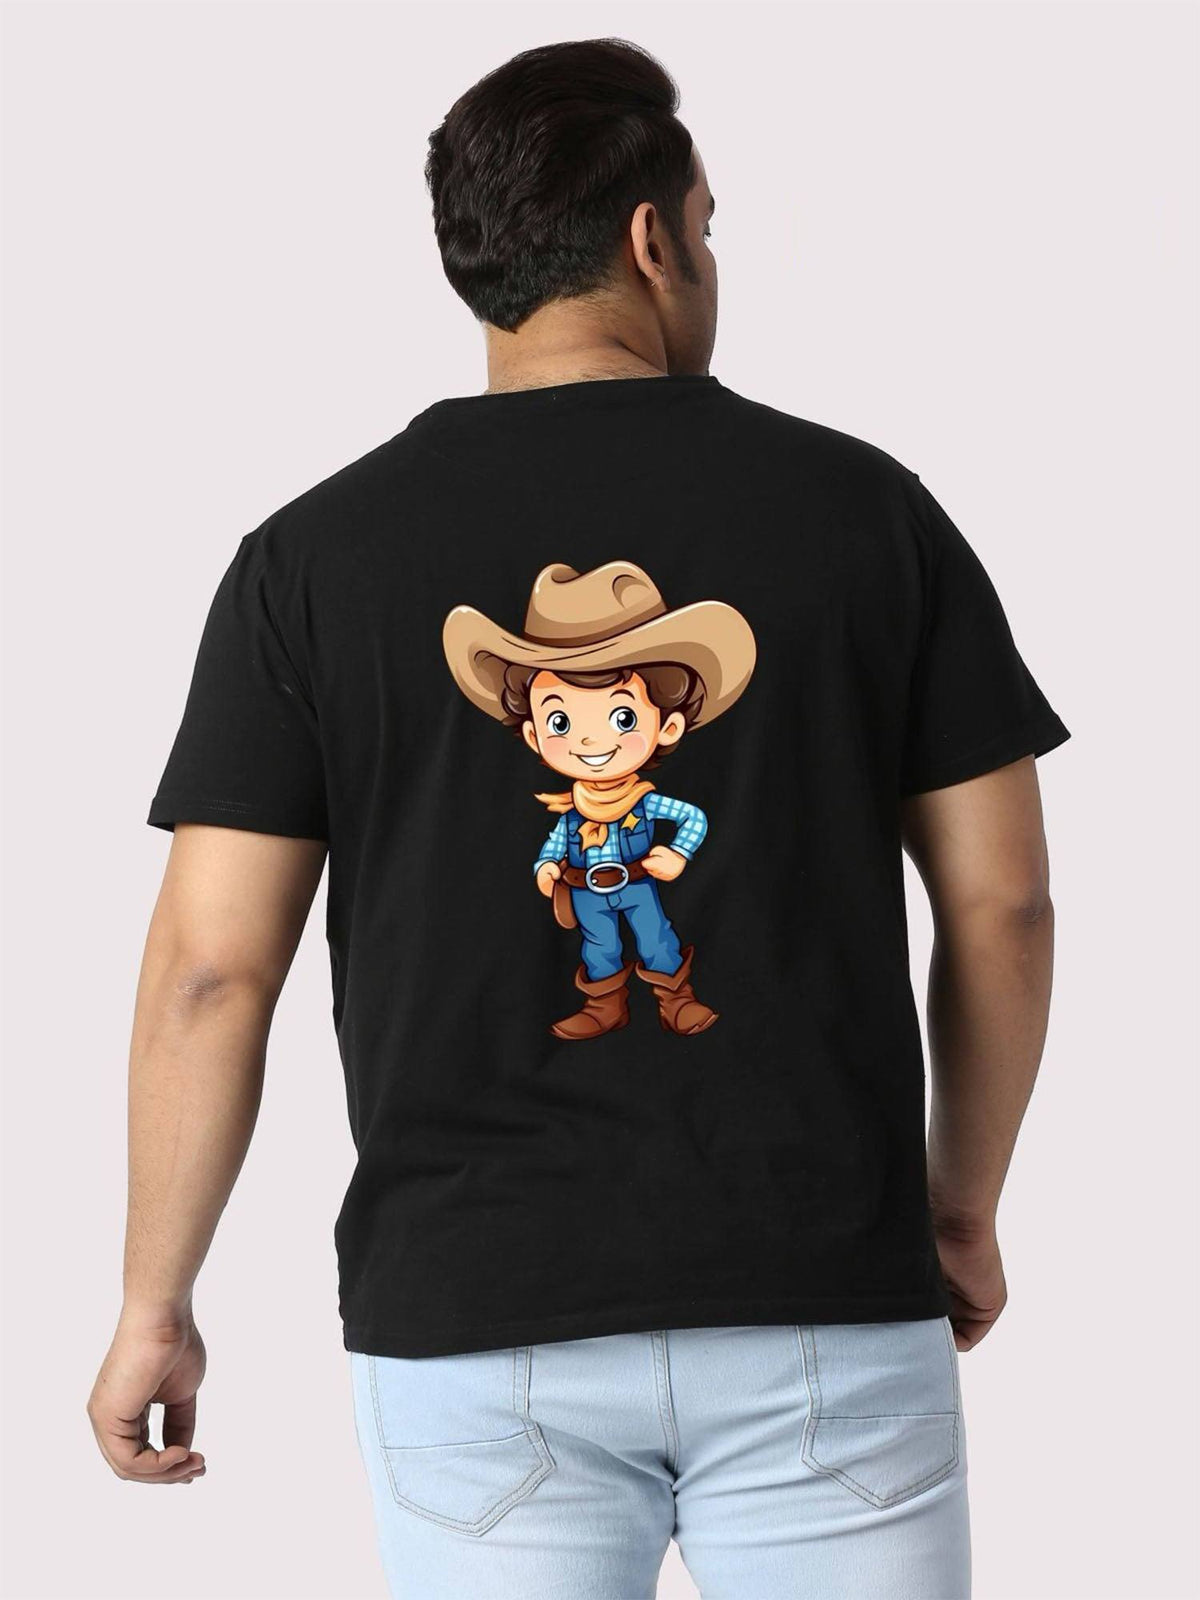 Men Plus Size Black Cowboy Printed Round Neck T-Shirt. - Guniaa Fashions